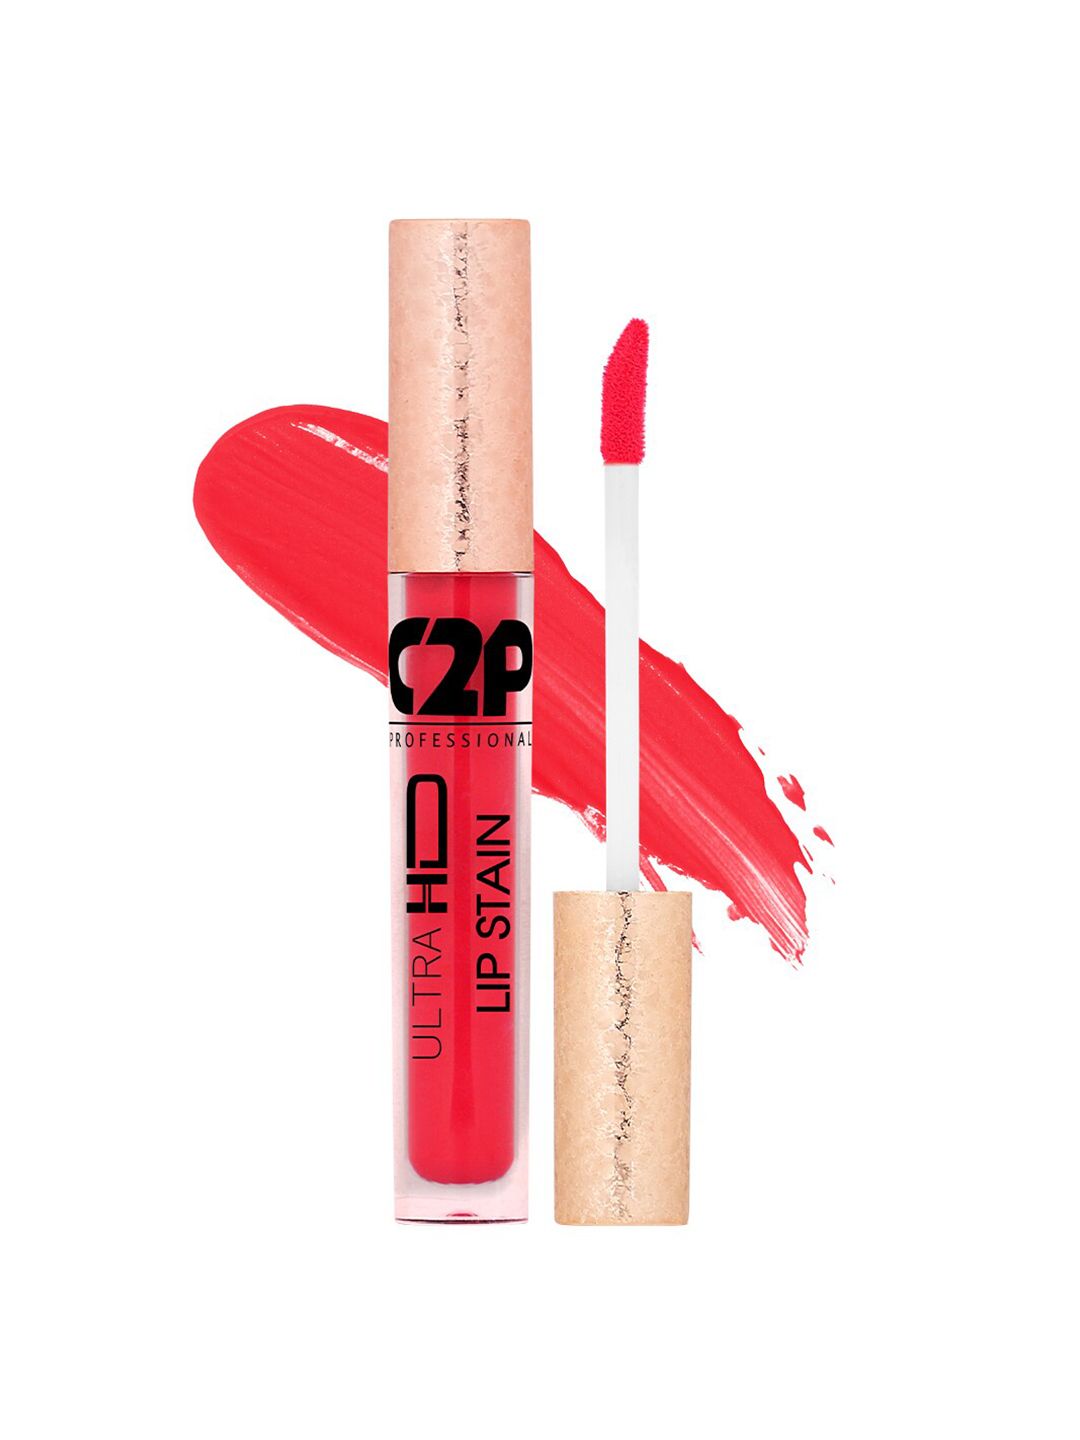 C2P PROFESSIONAL MAKEUP Lip Stain Liquid Lipstick - Bubble Gummer 05 5ml Price in India